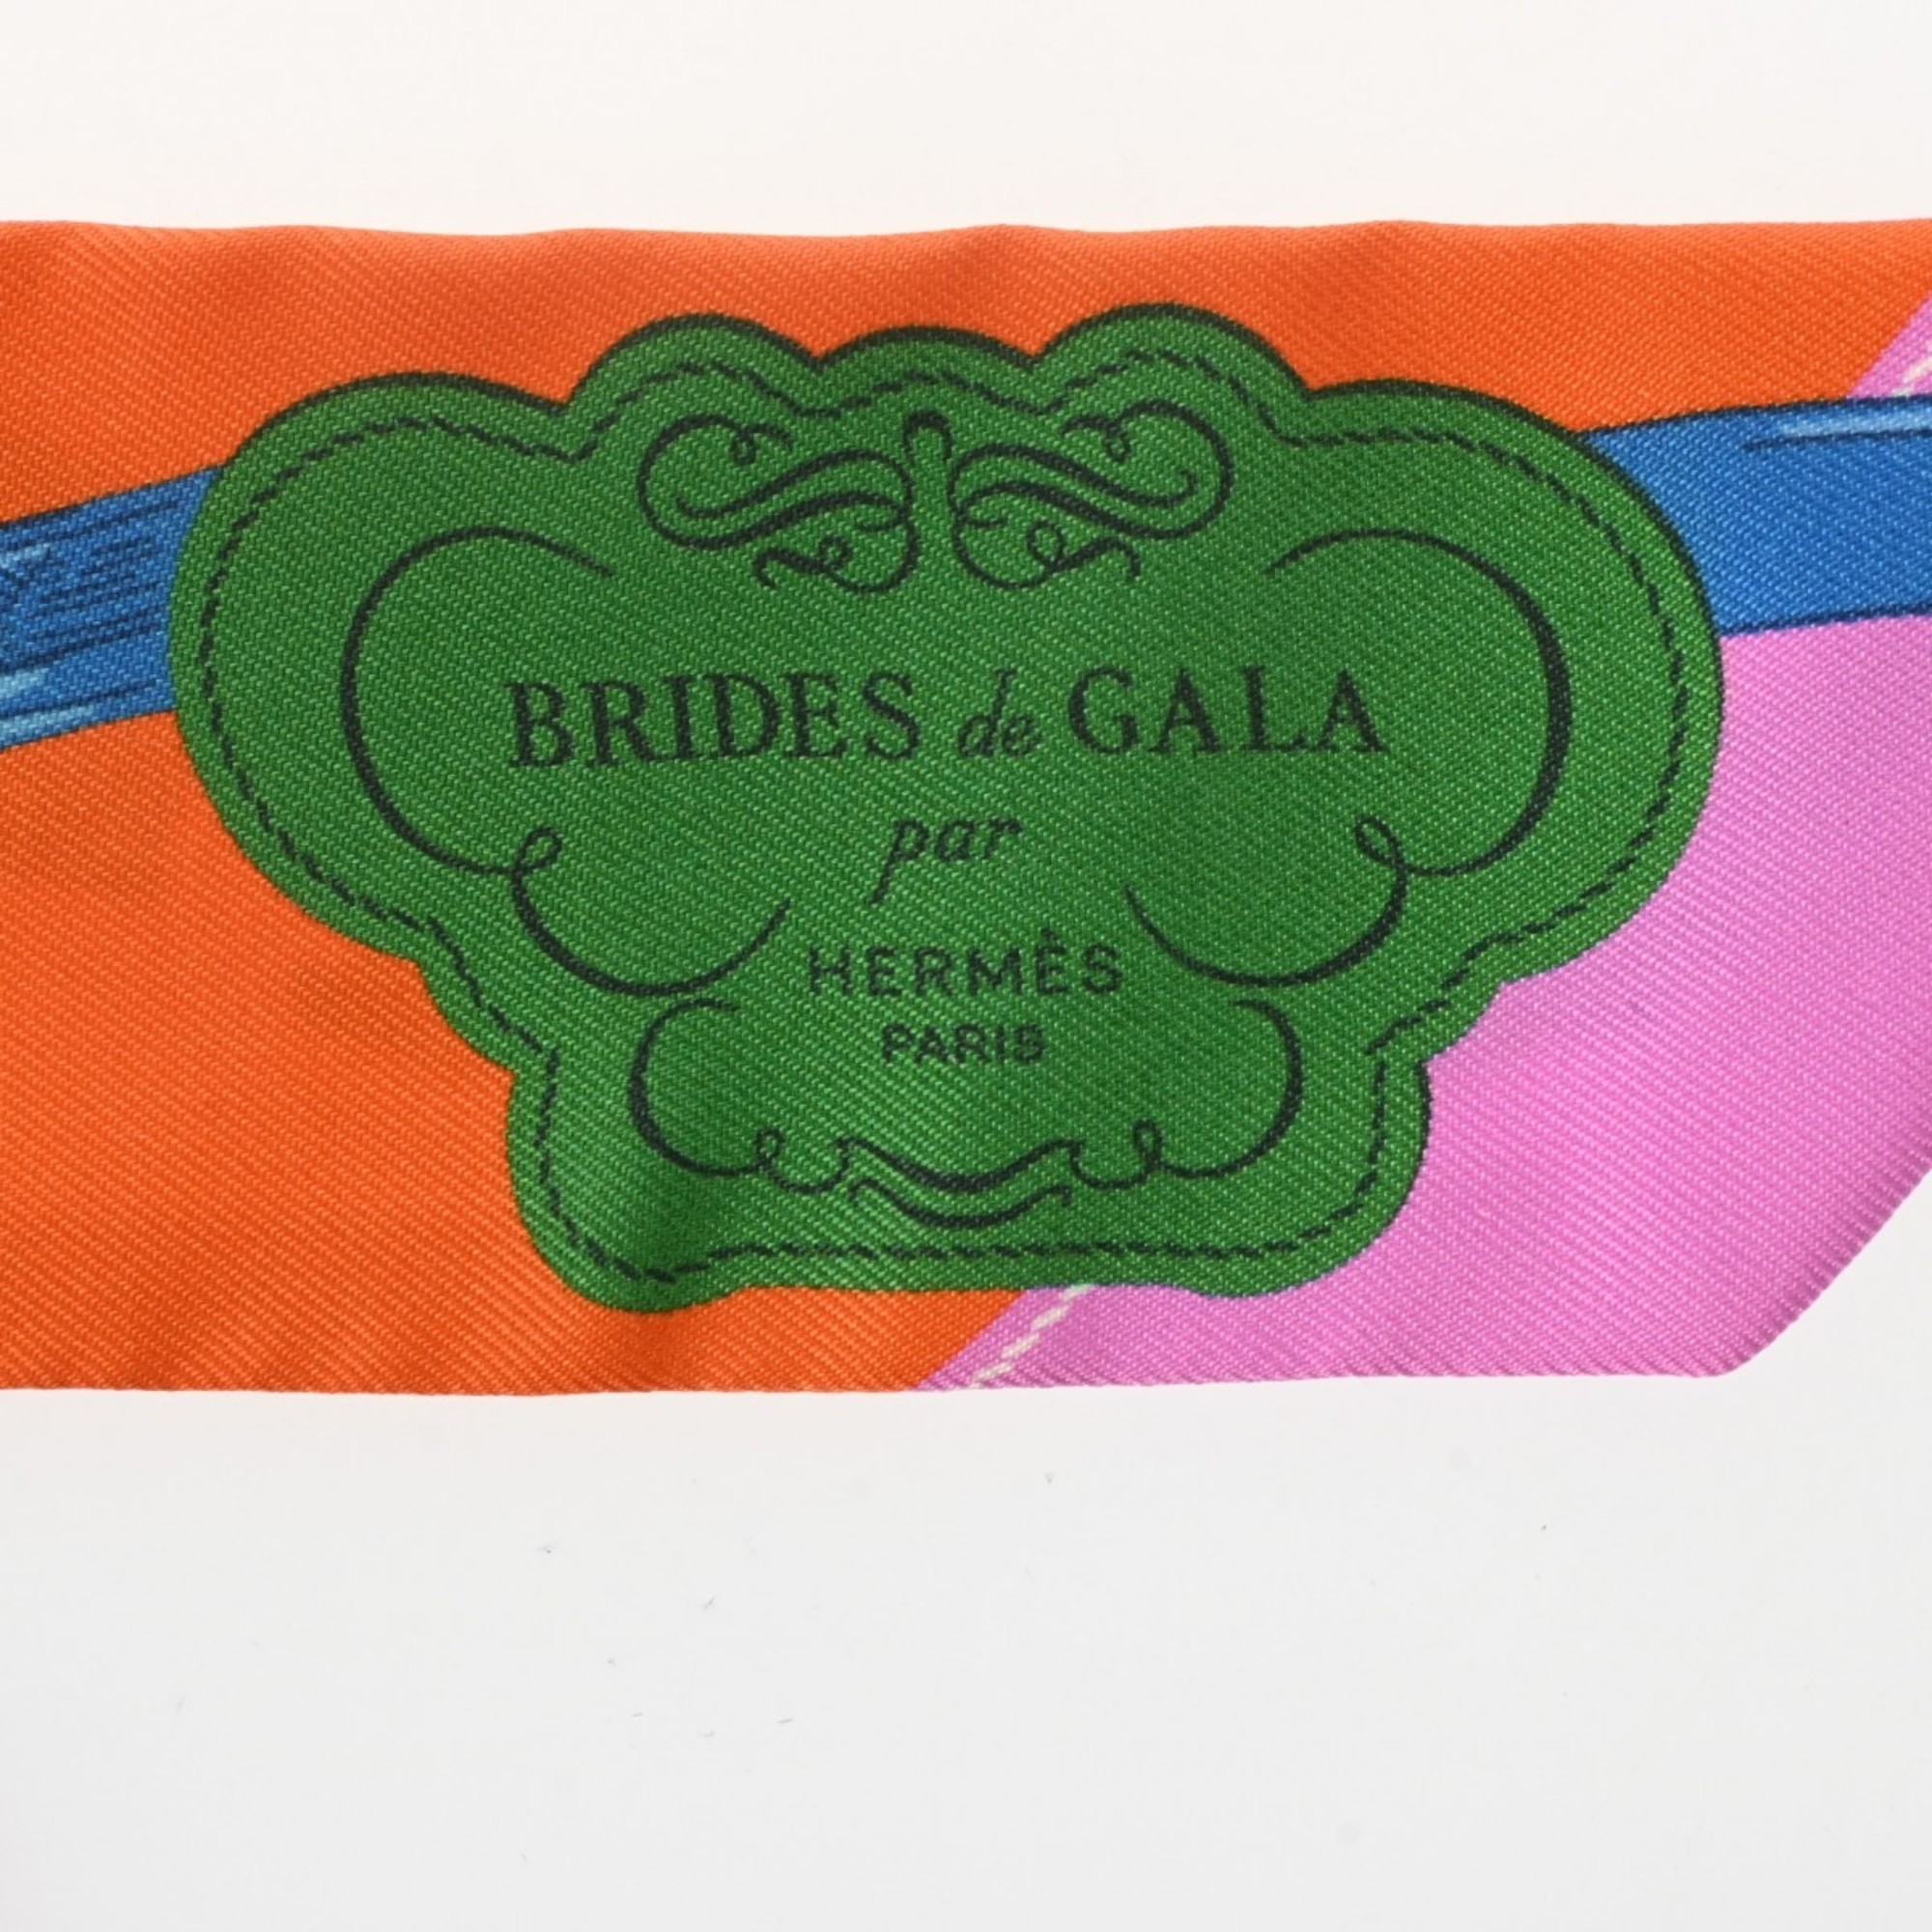 HERMES Twilly Brides de Gala Orange/Blue/Cyclamen 063940S Women's 100% Silk Scarf Muffler